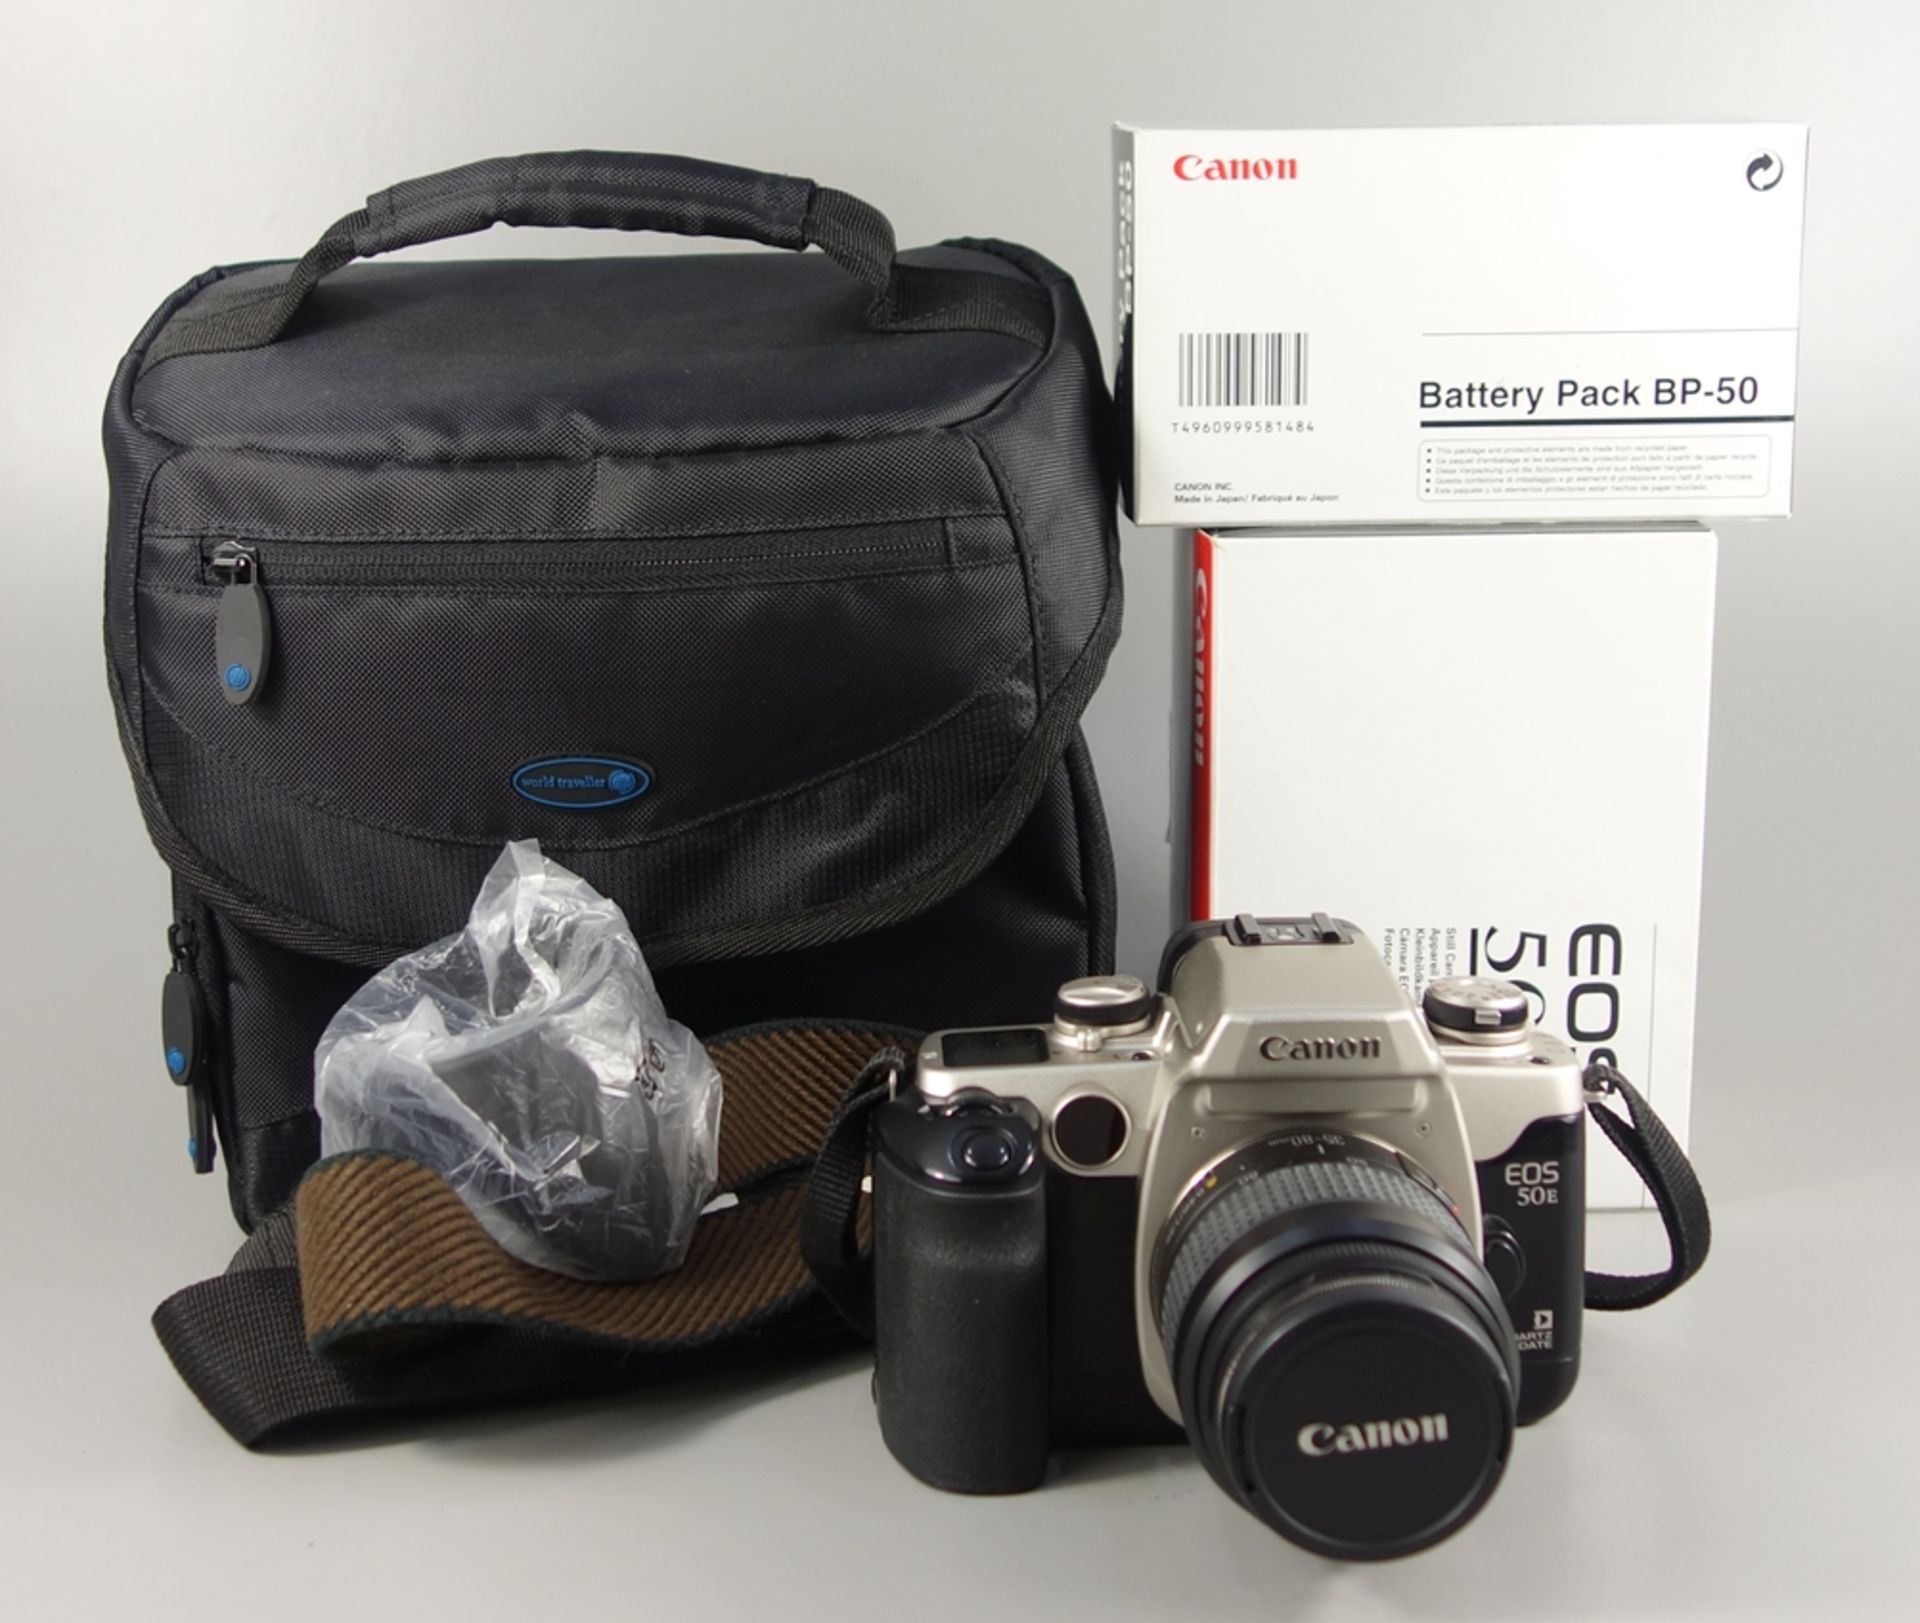 Canon EOS 50 E QD, Spiegelreflexkamera mit Autofokus, Vollautomatik, mit Objektiv Canon Zoom Lens EF